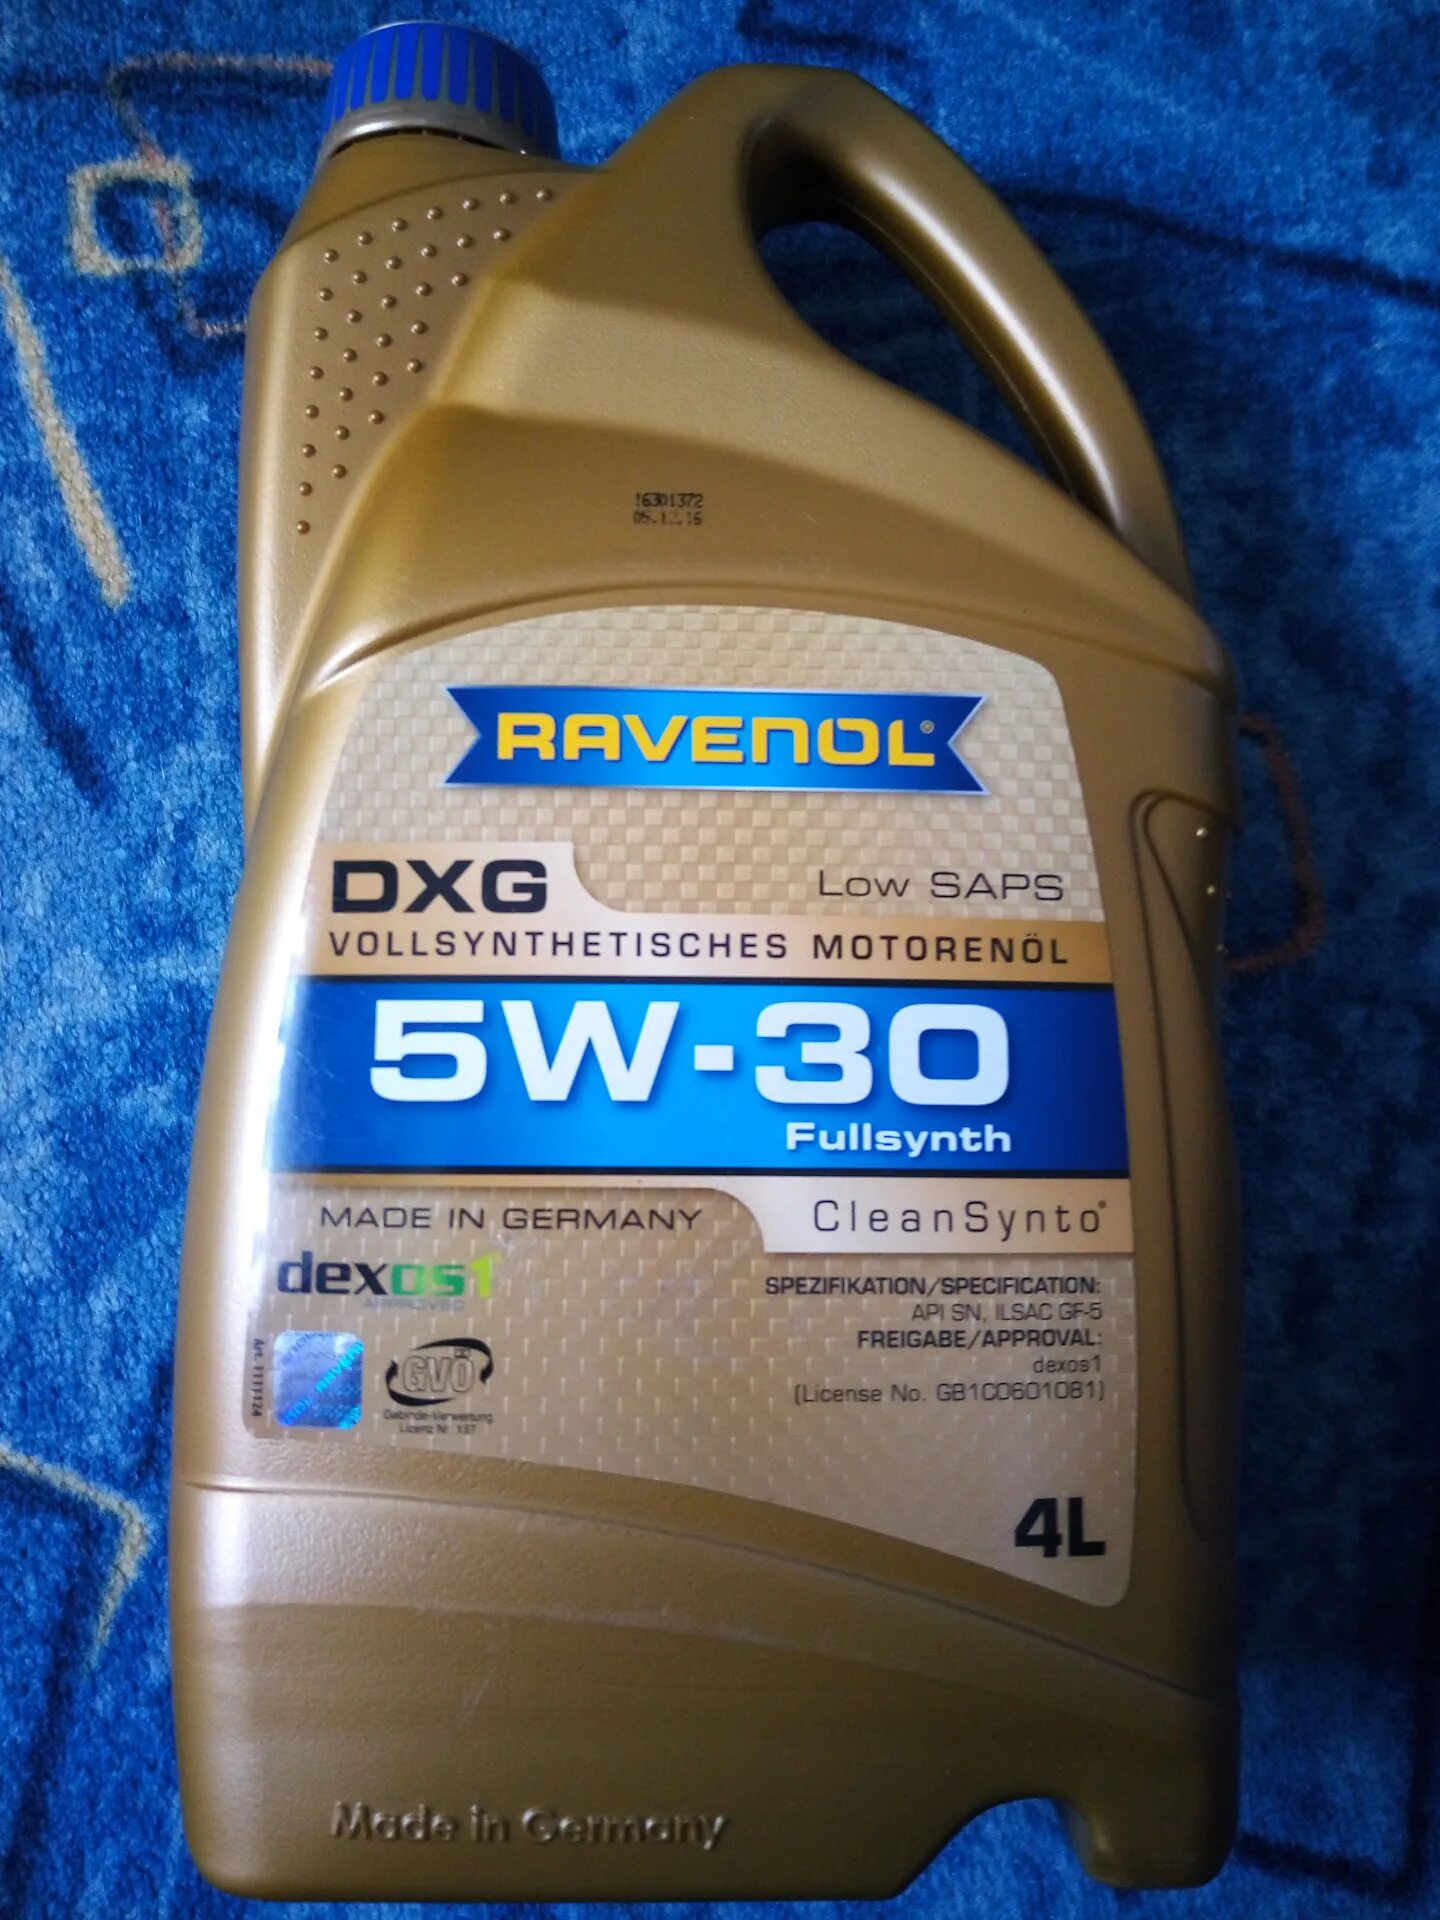 Ravenol DXG 5w-30. Ravenol 5w30 Hyundai Solaris. Ravenol 5w30 DXG 5l. 5w30 DXG 4l Ravenol артикул.